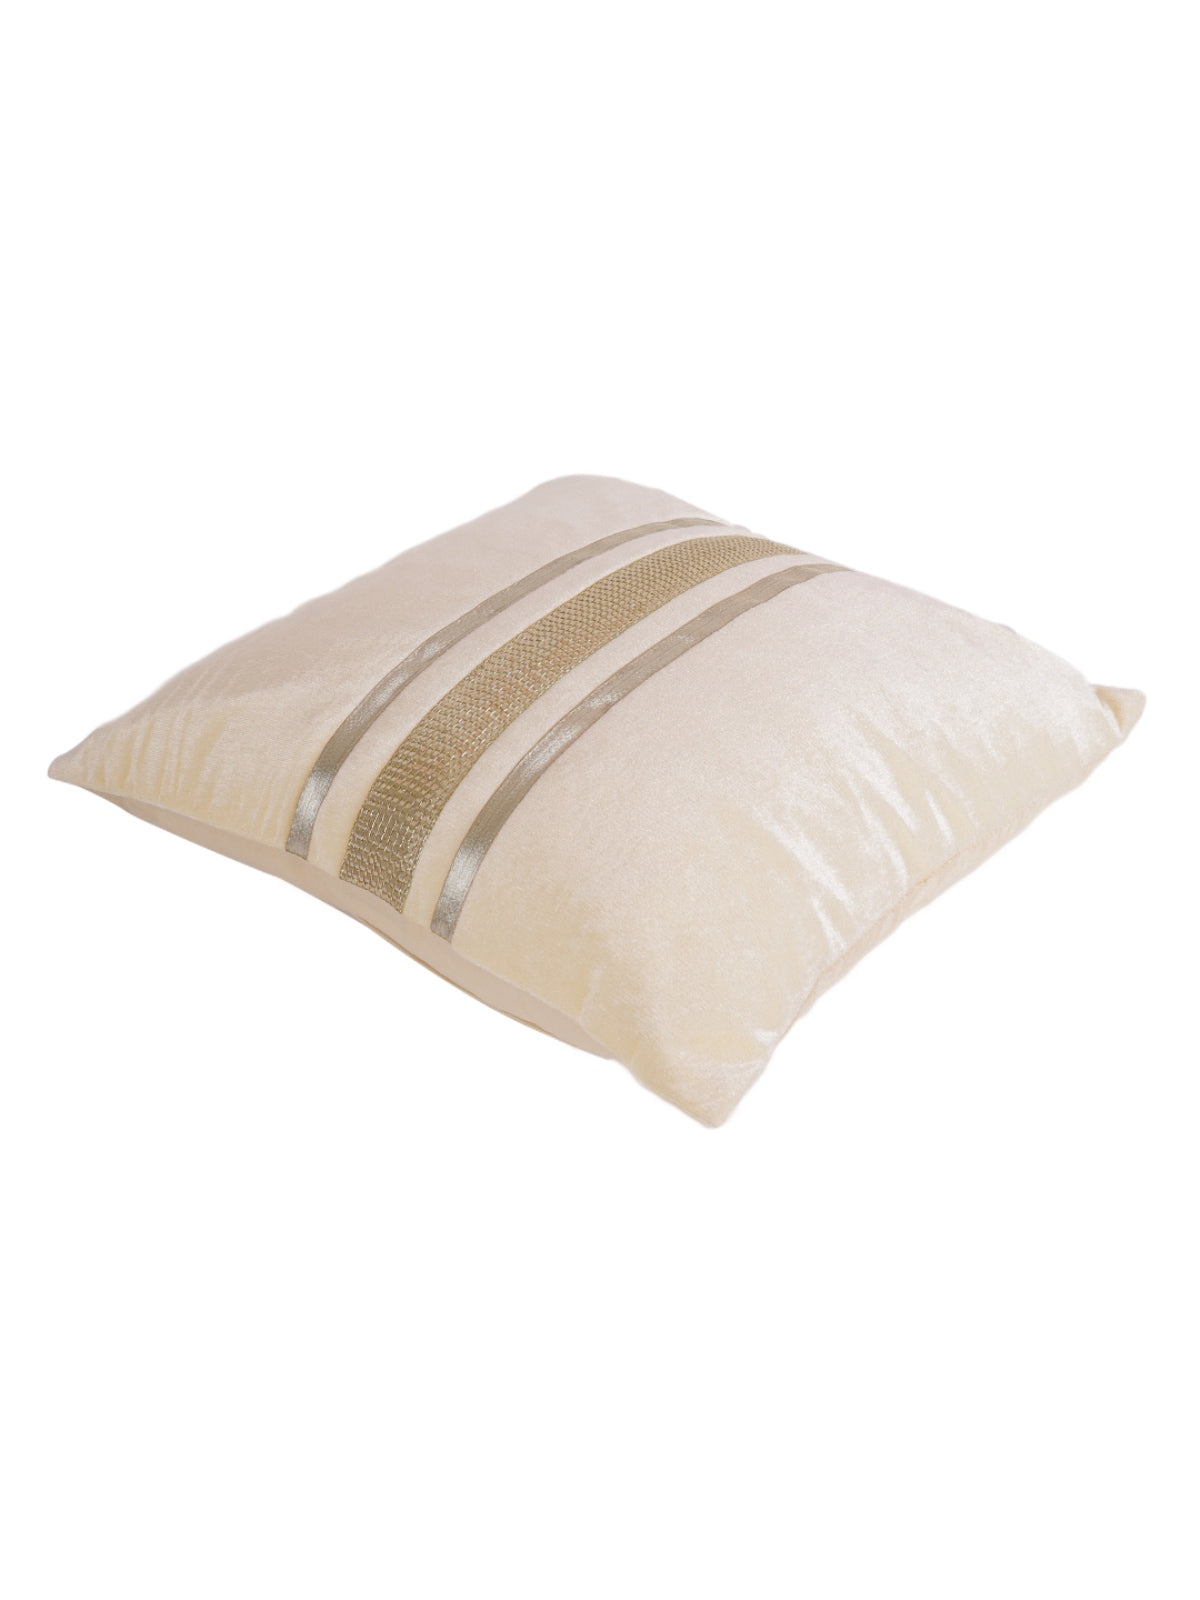 Velvet Designer Cushion Covers 16x16 Inches, Set of 5 - Cream